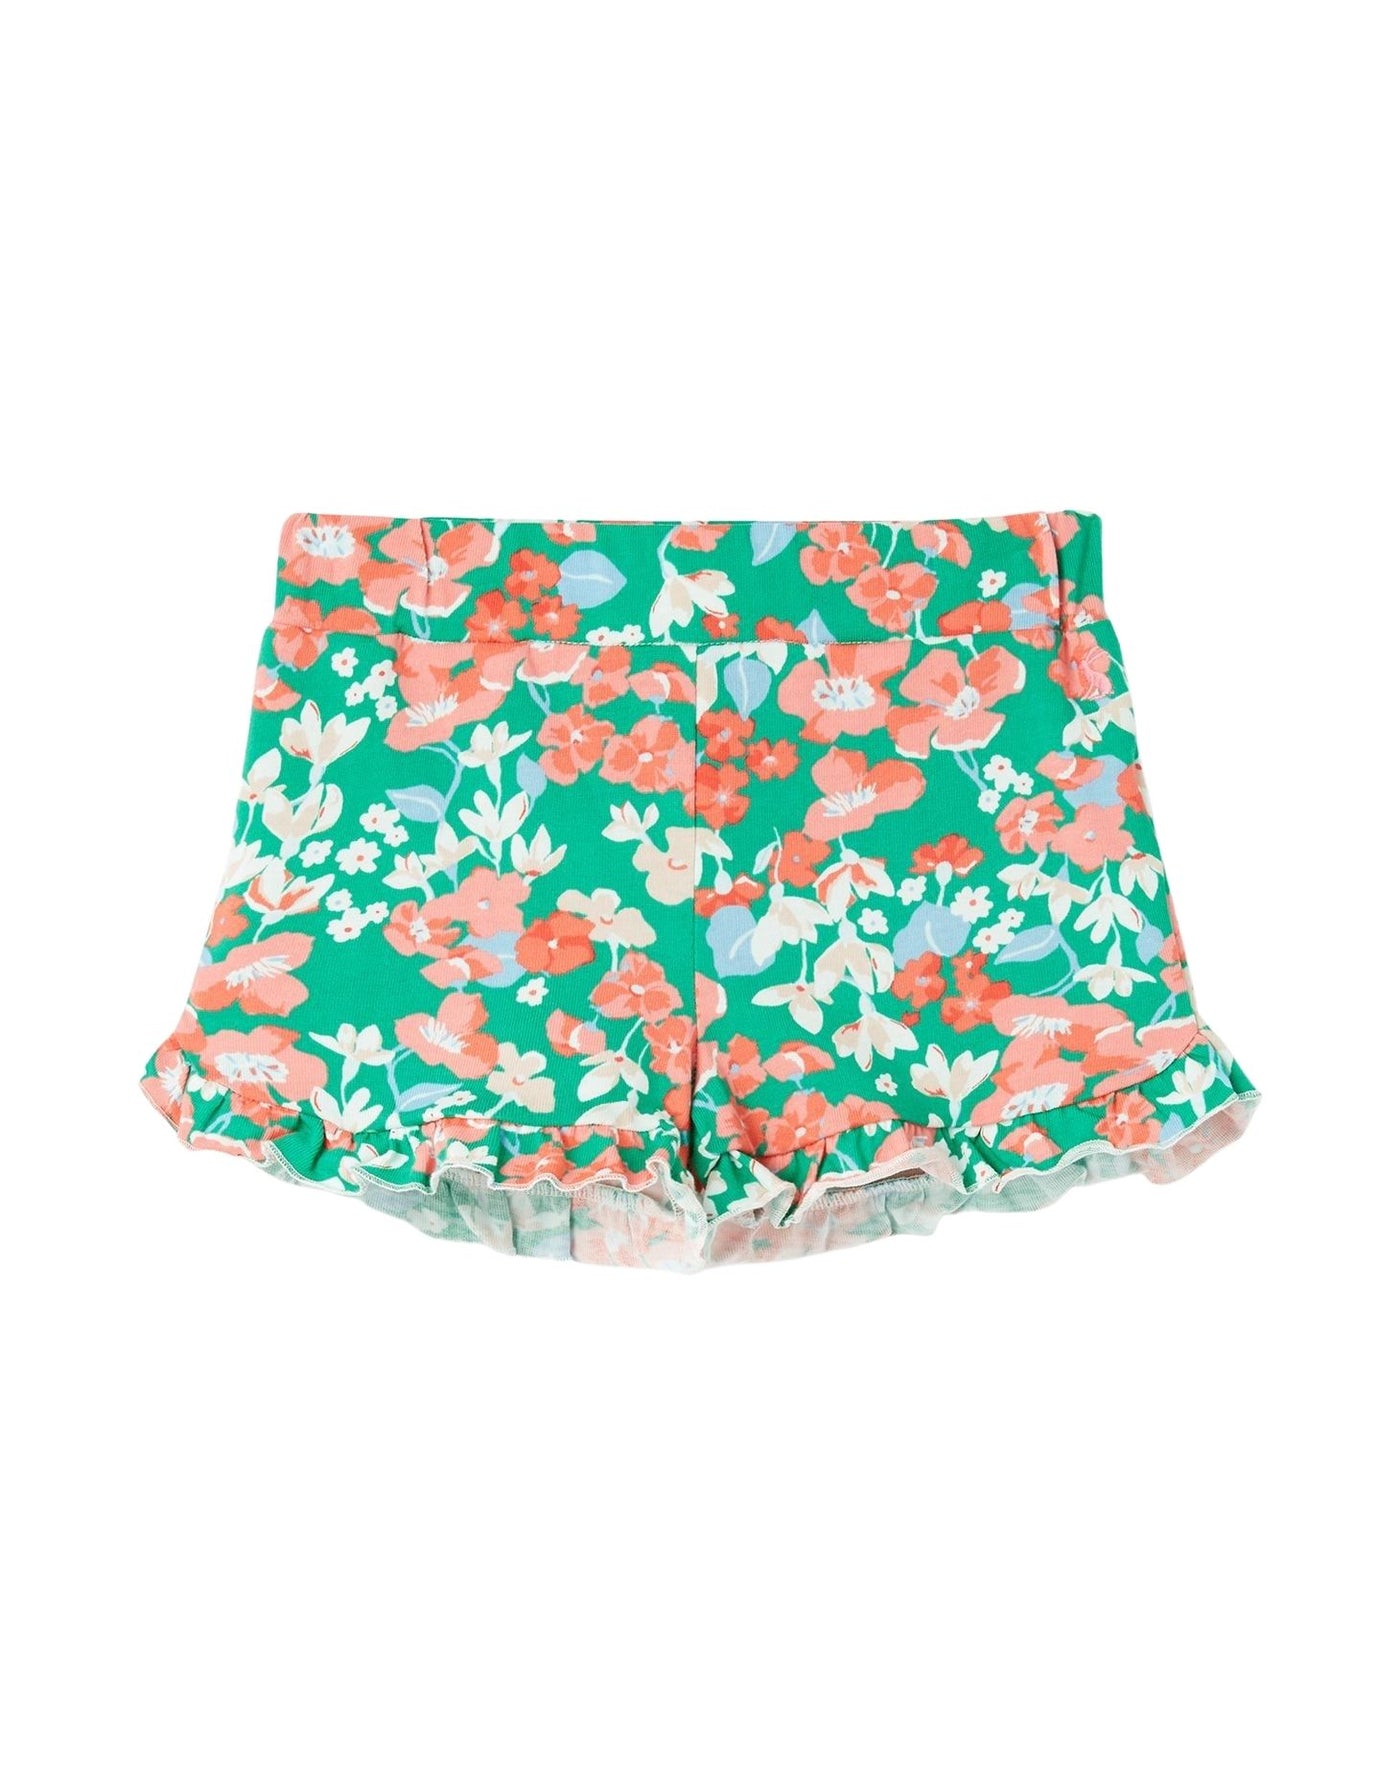 Joules Amara Jersey Shorts - Green Floral